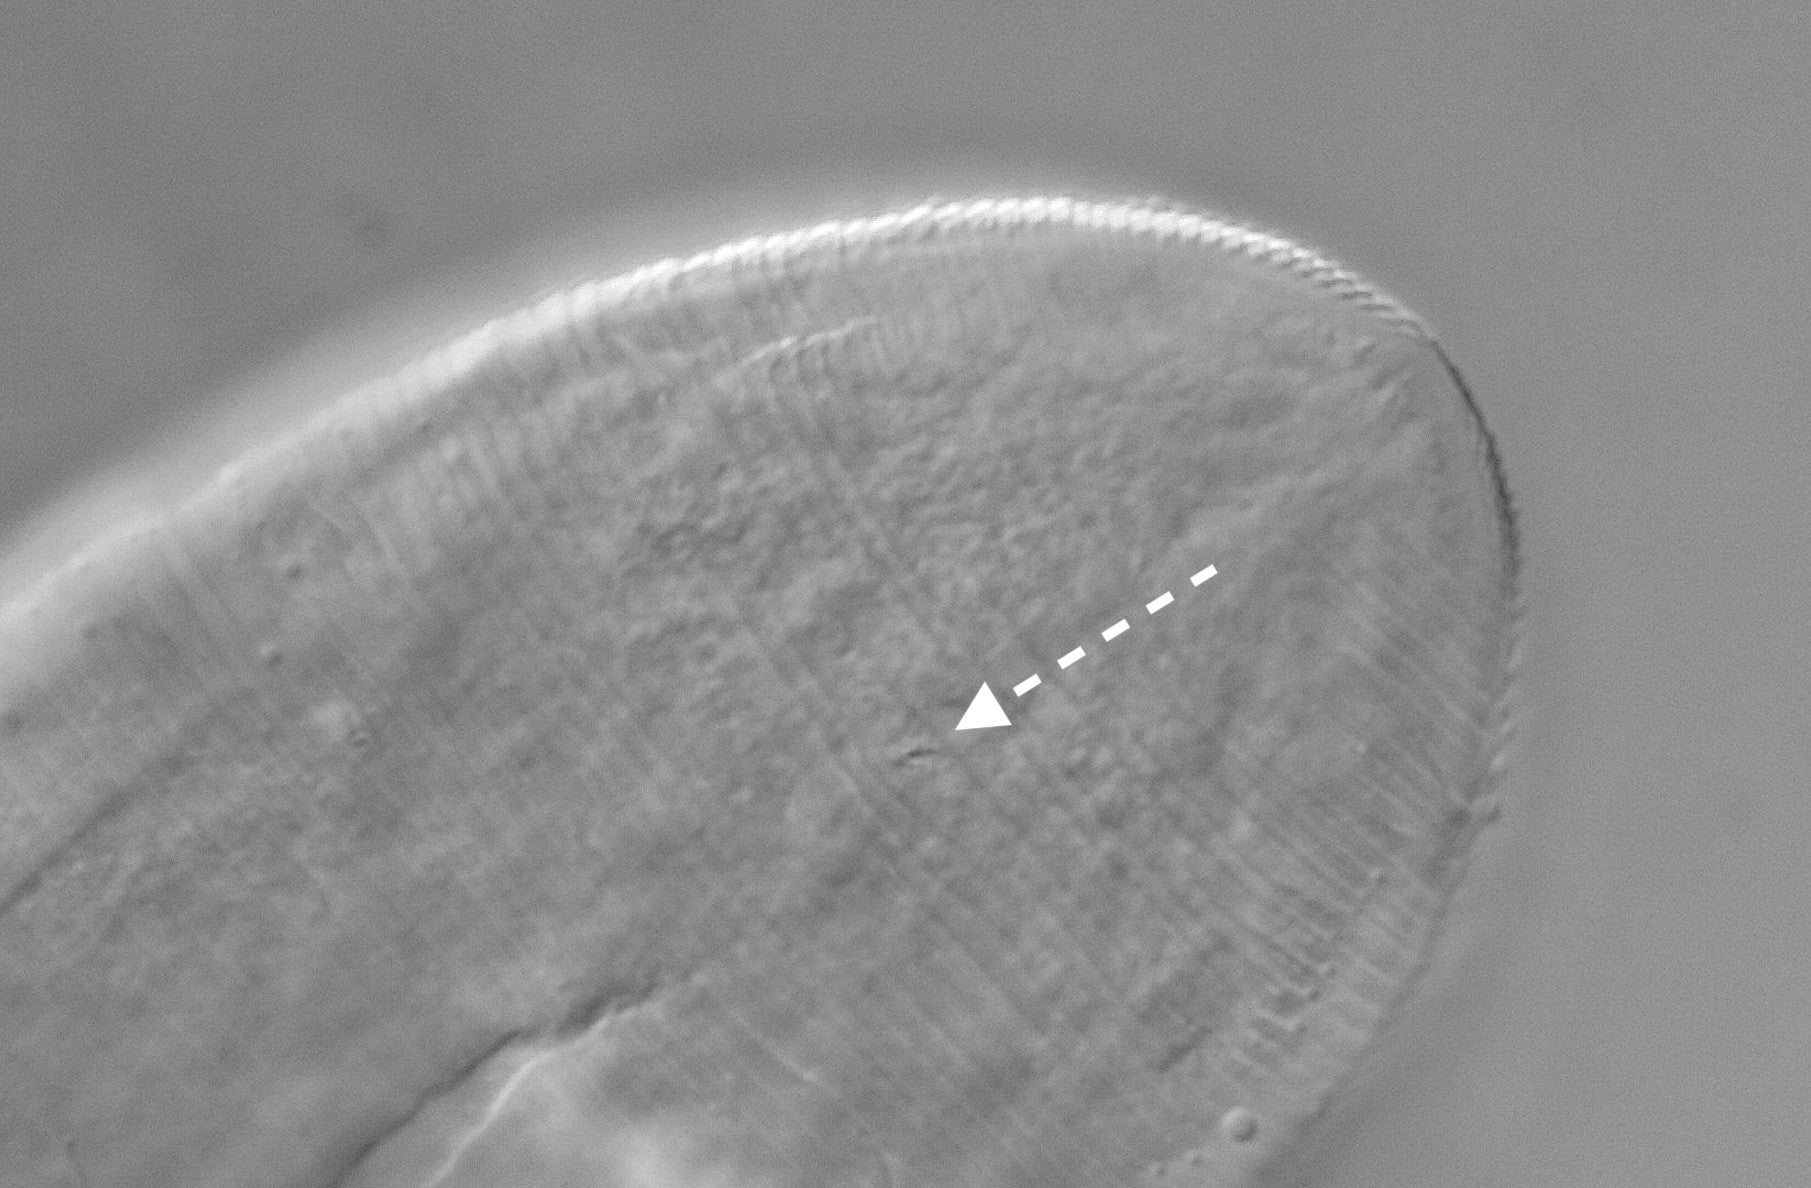 a close up of a face mite anus under a microscope